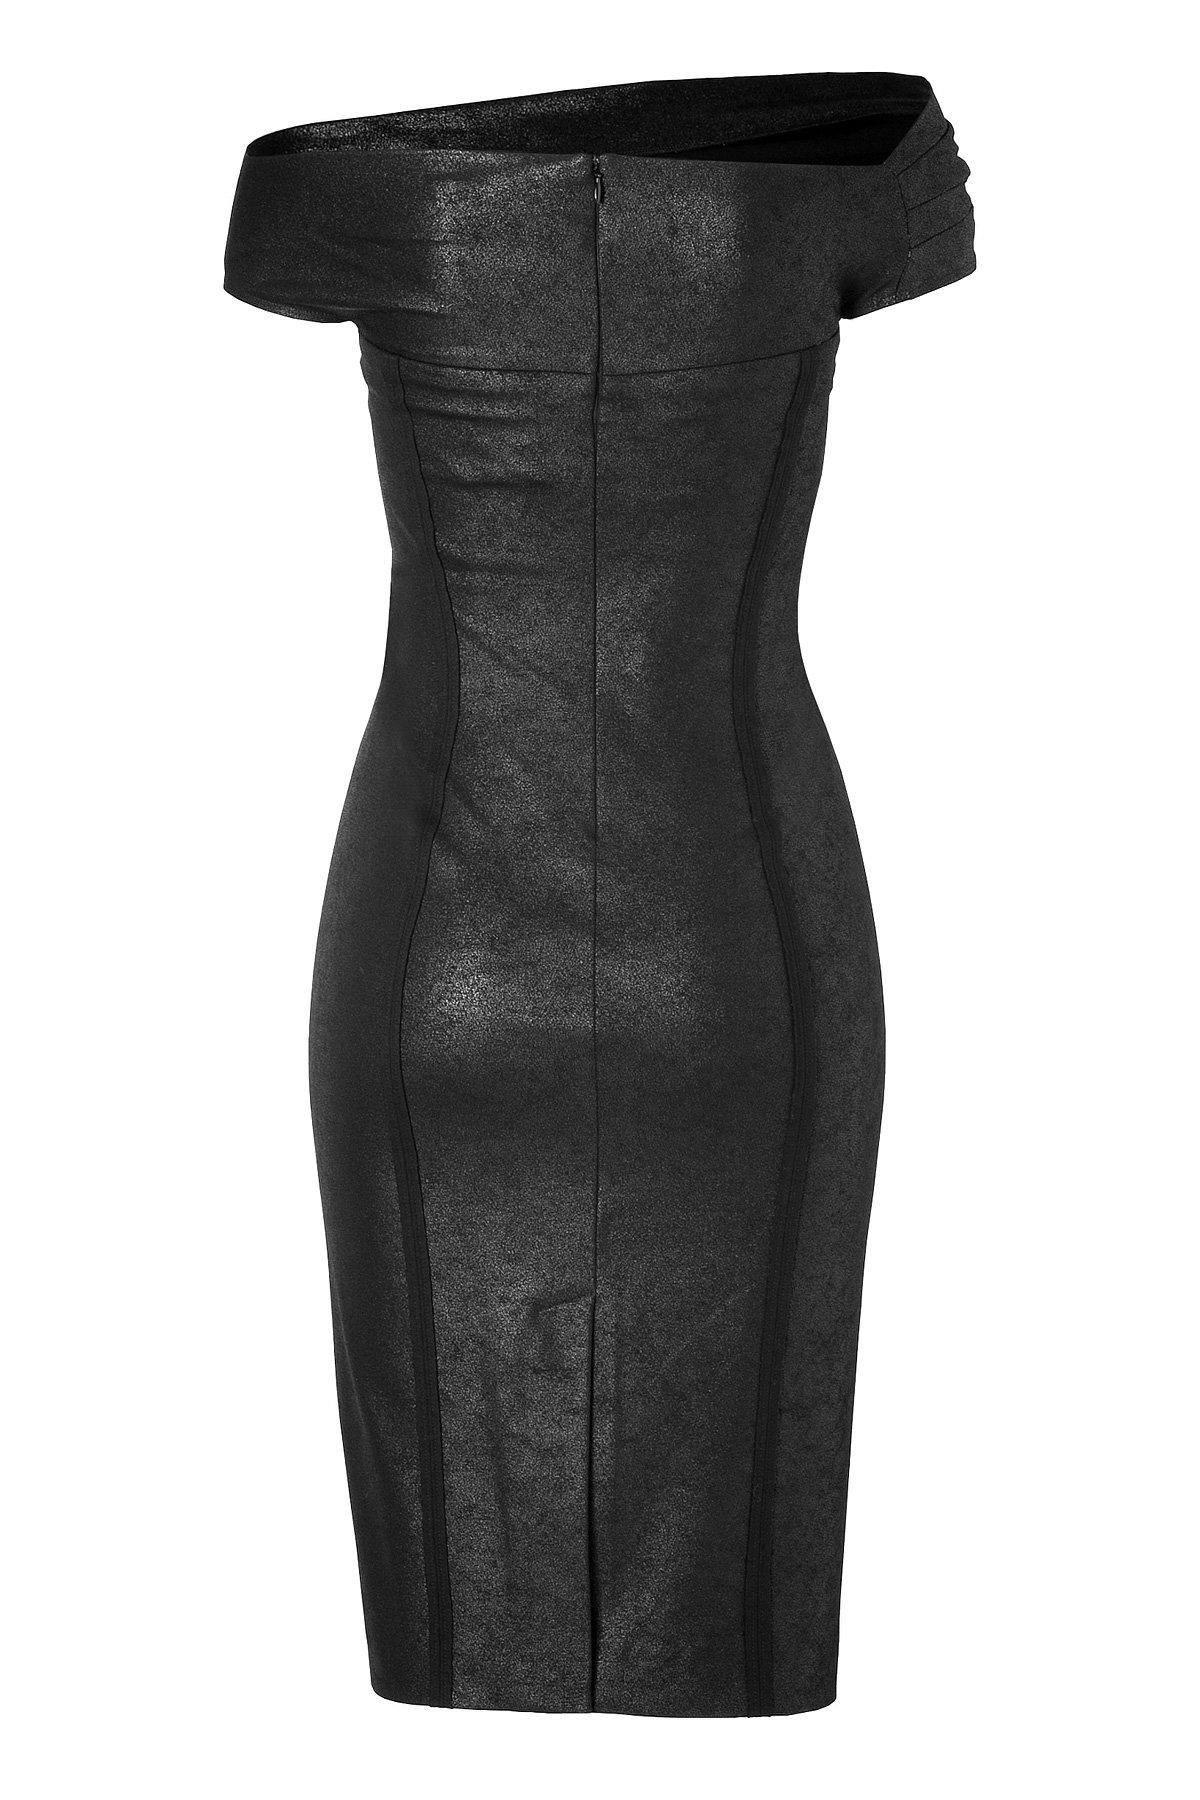 Lyst - Donna Karan Dress In Black in Black